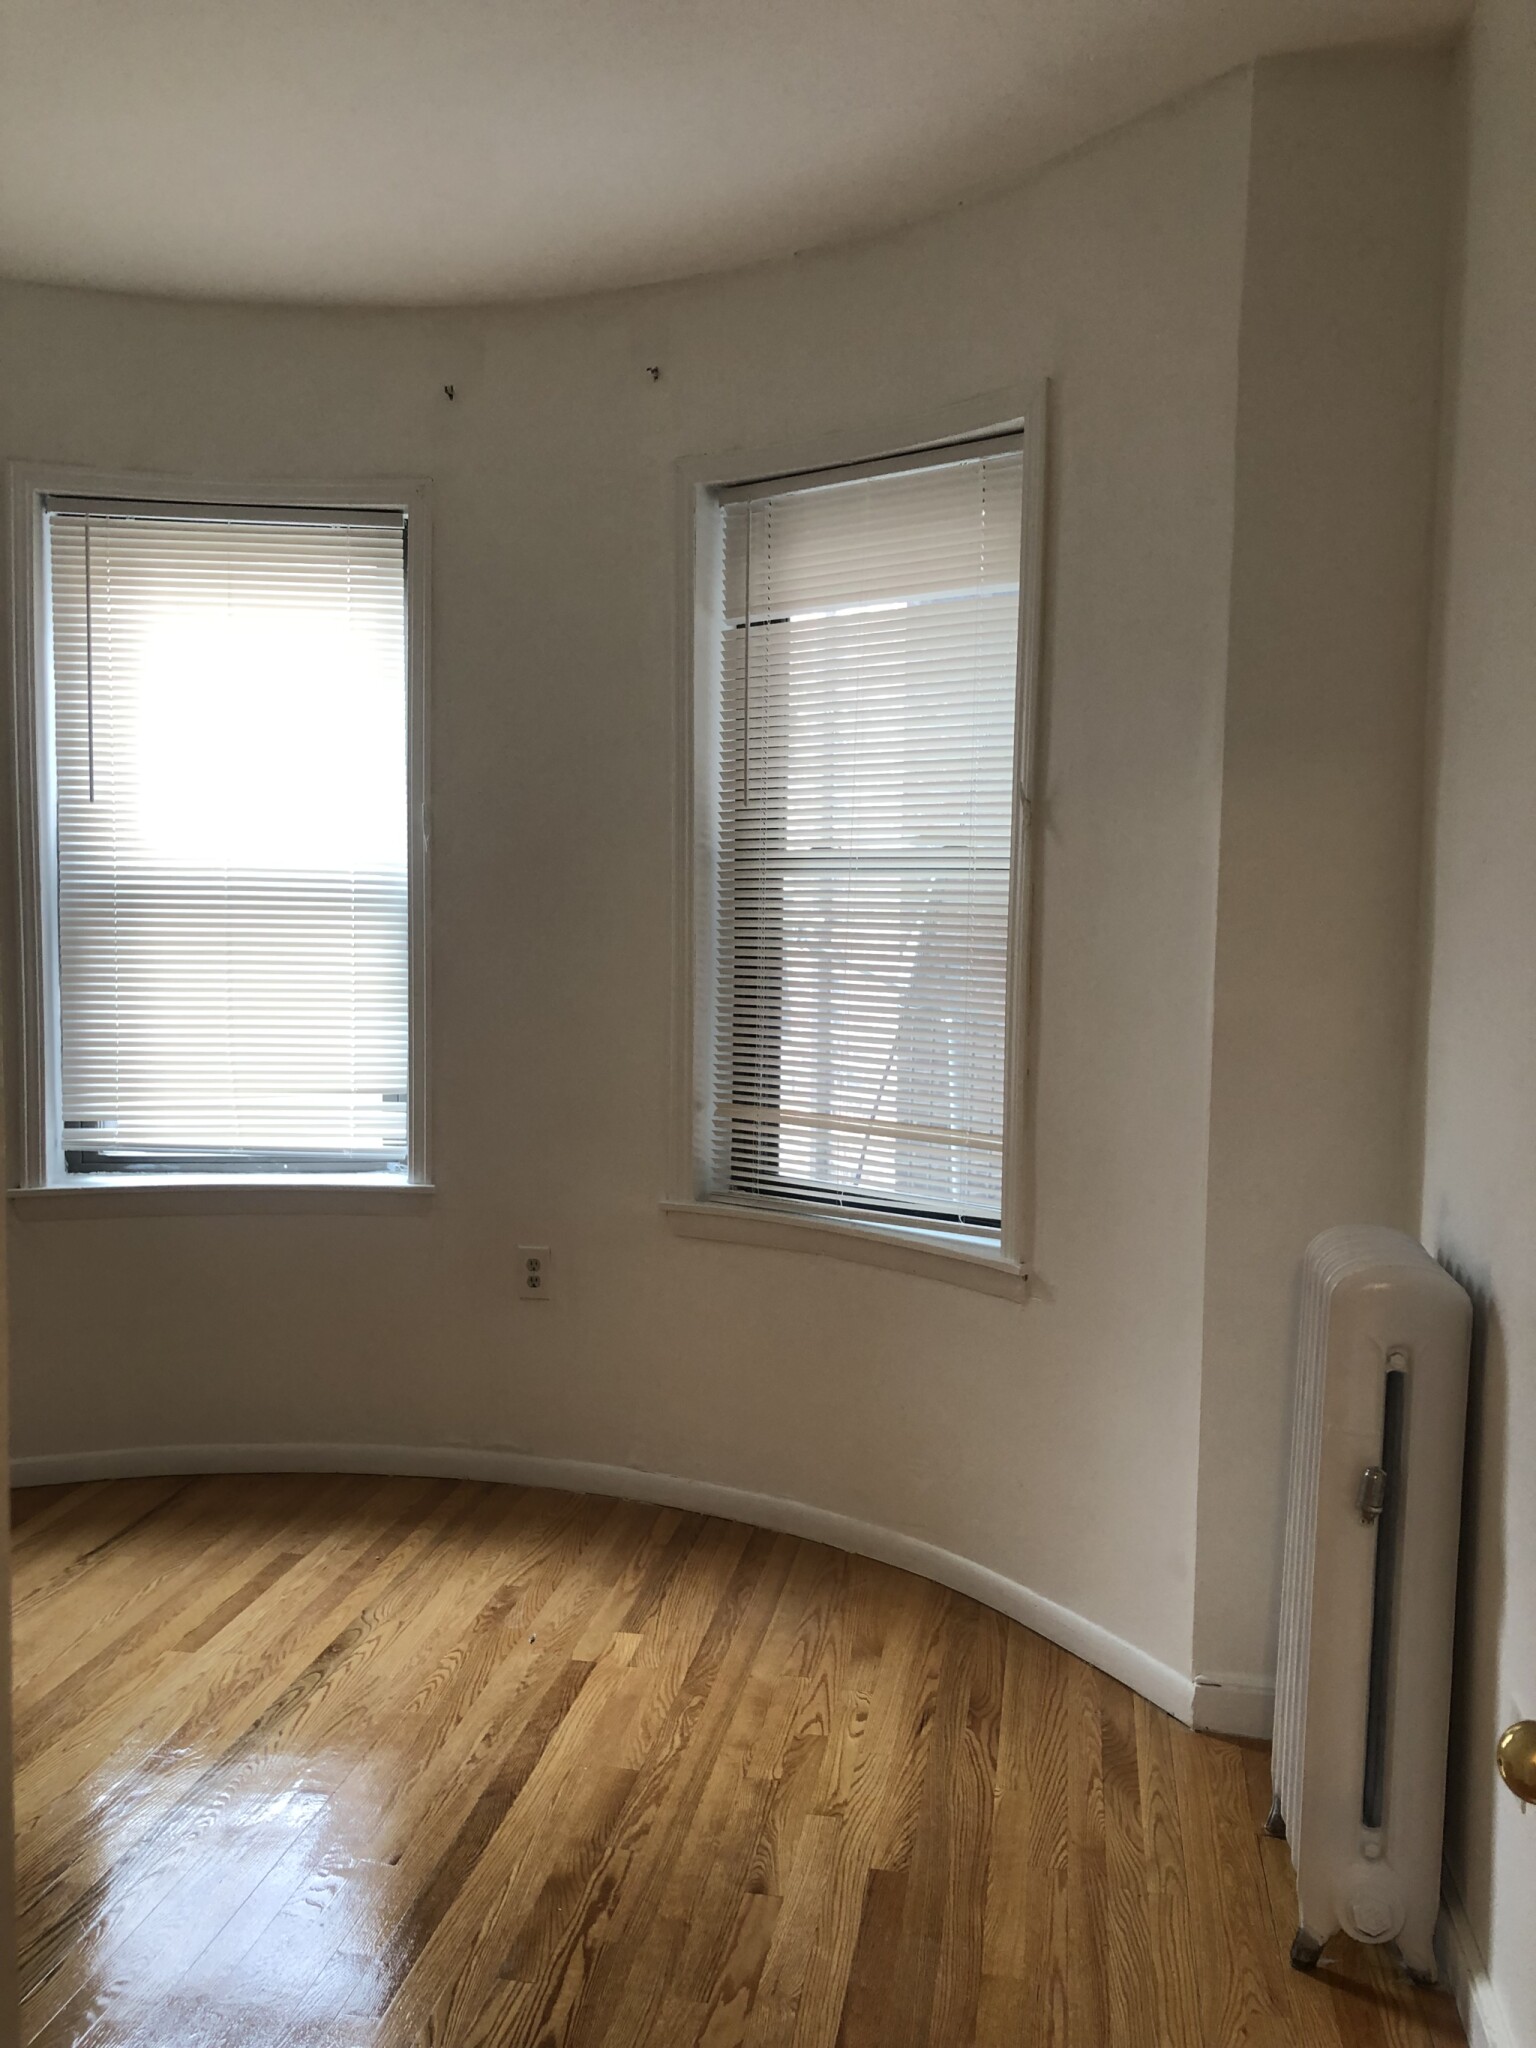 Photos of apartment on Hichborn St.,Boston MA 02135